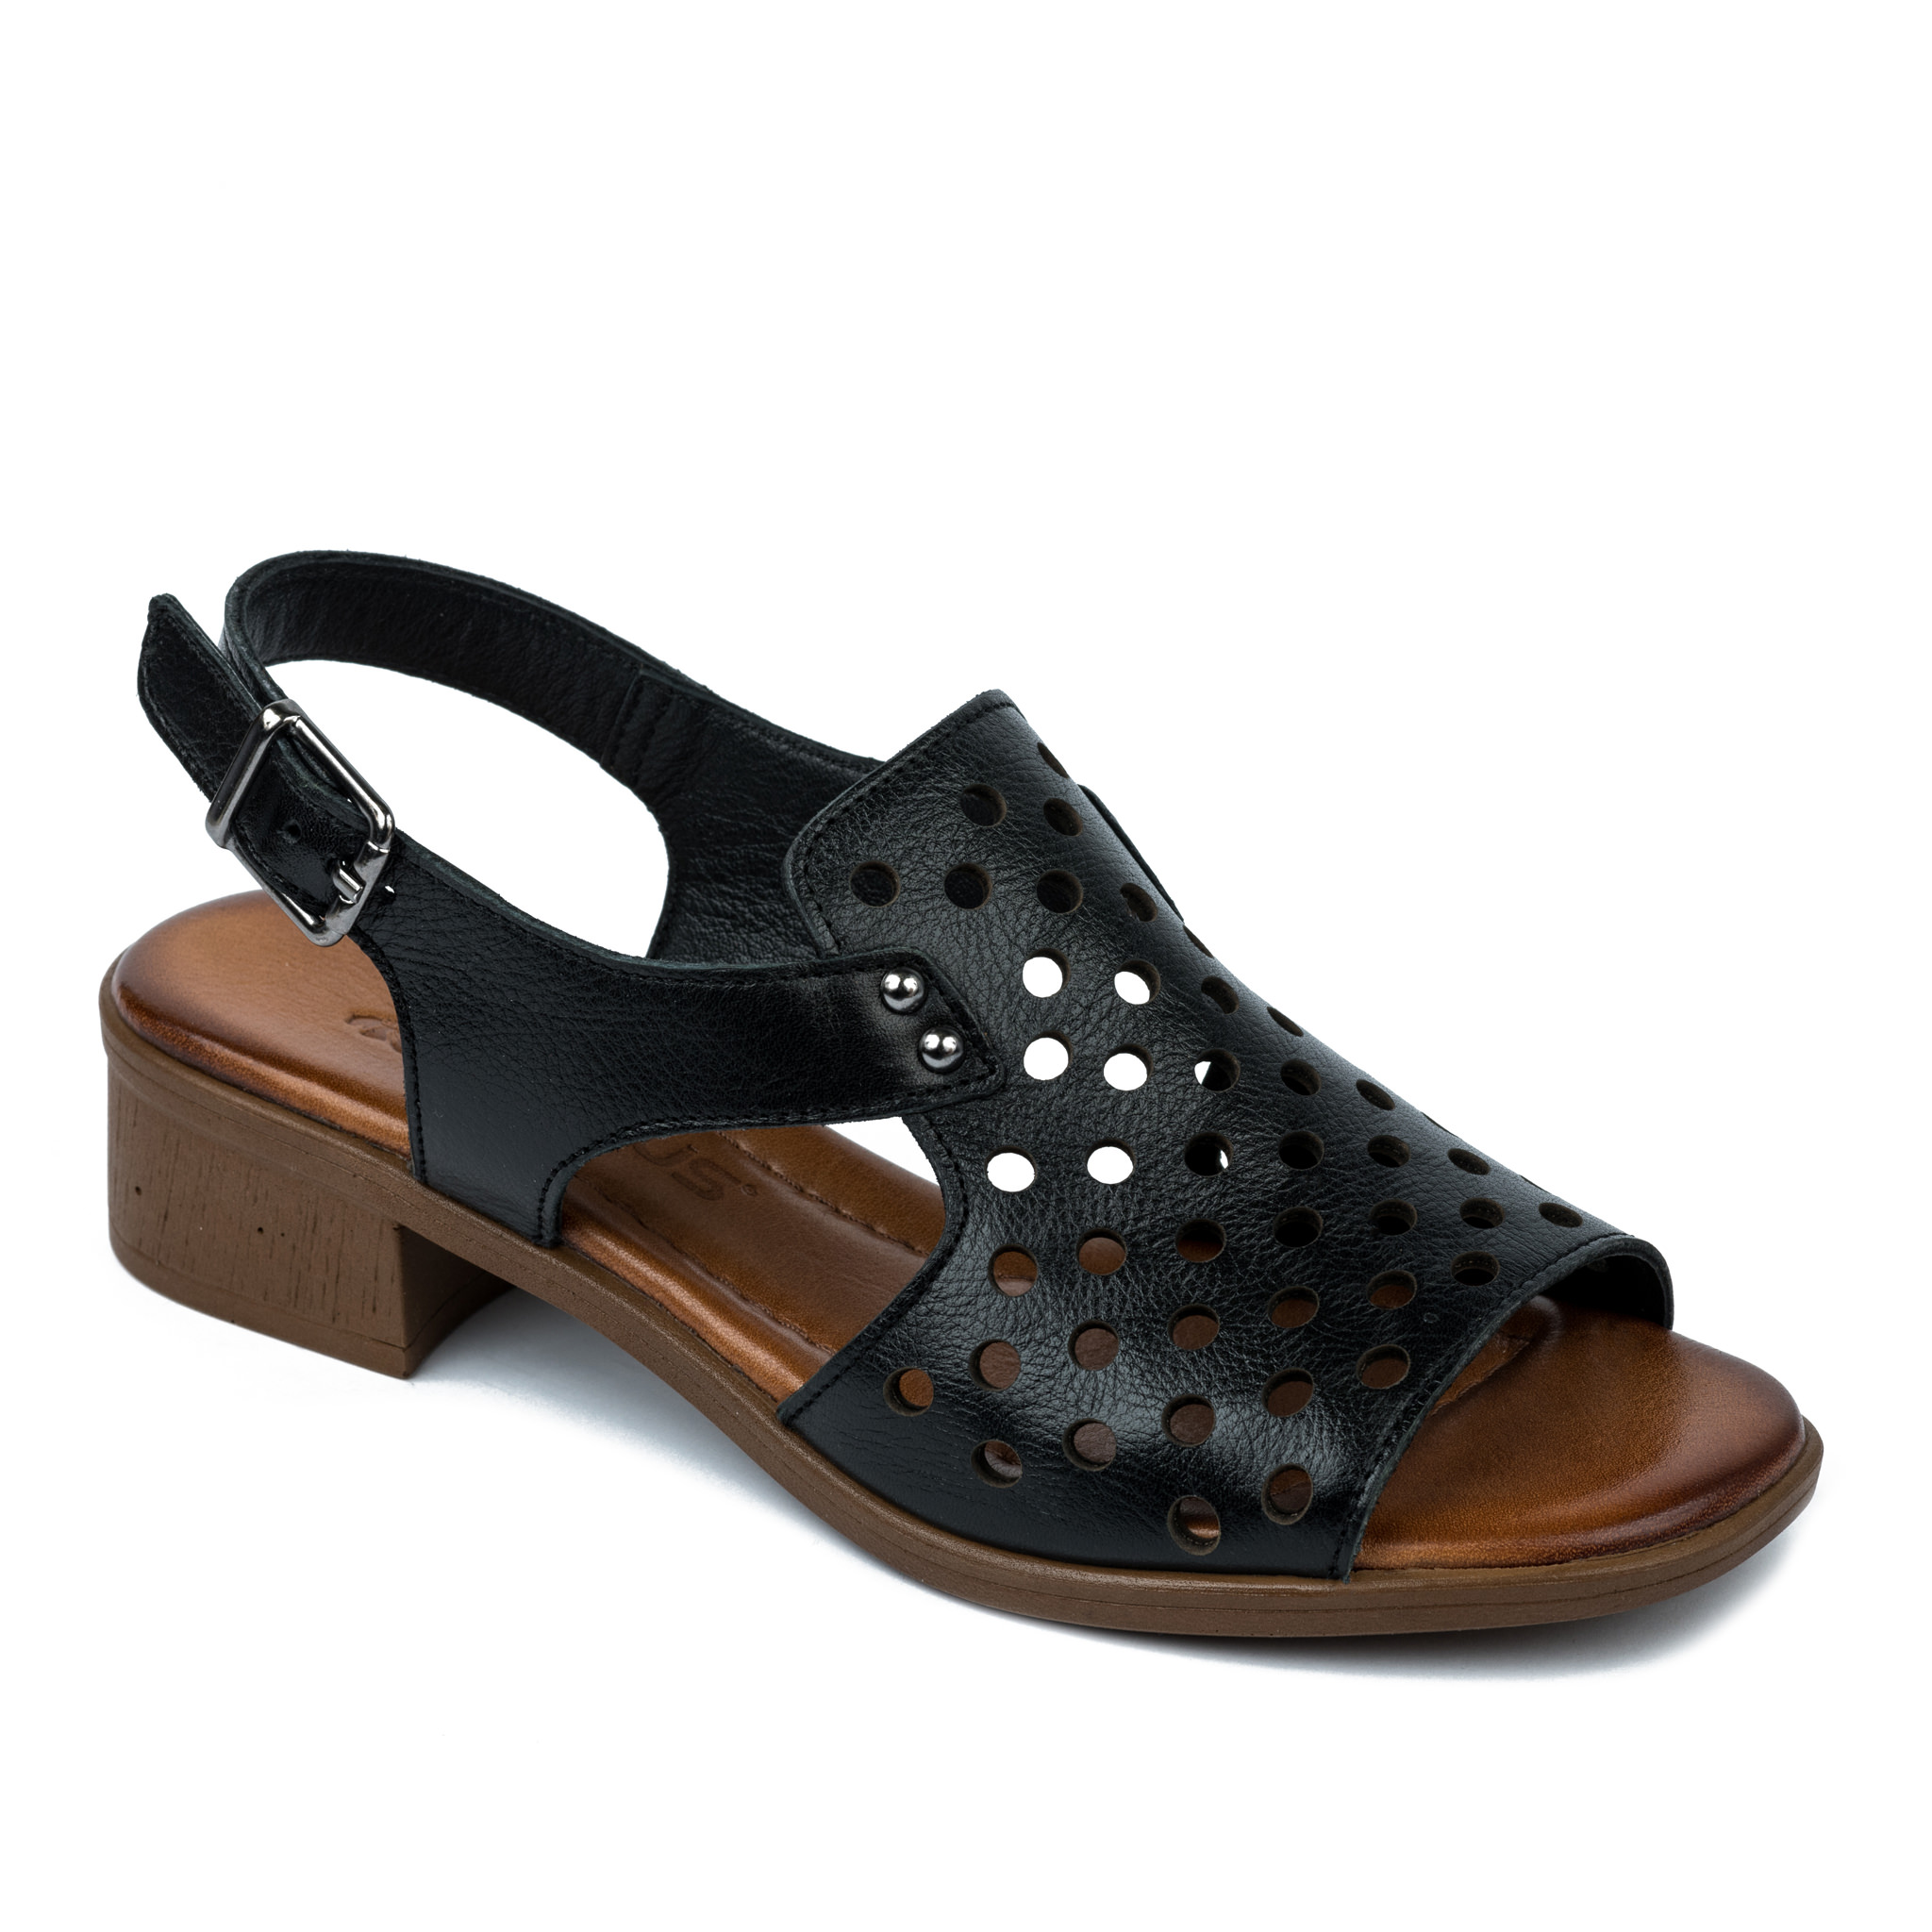 Women sandals A473 - BLACK